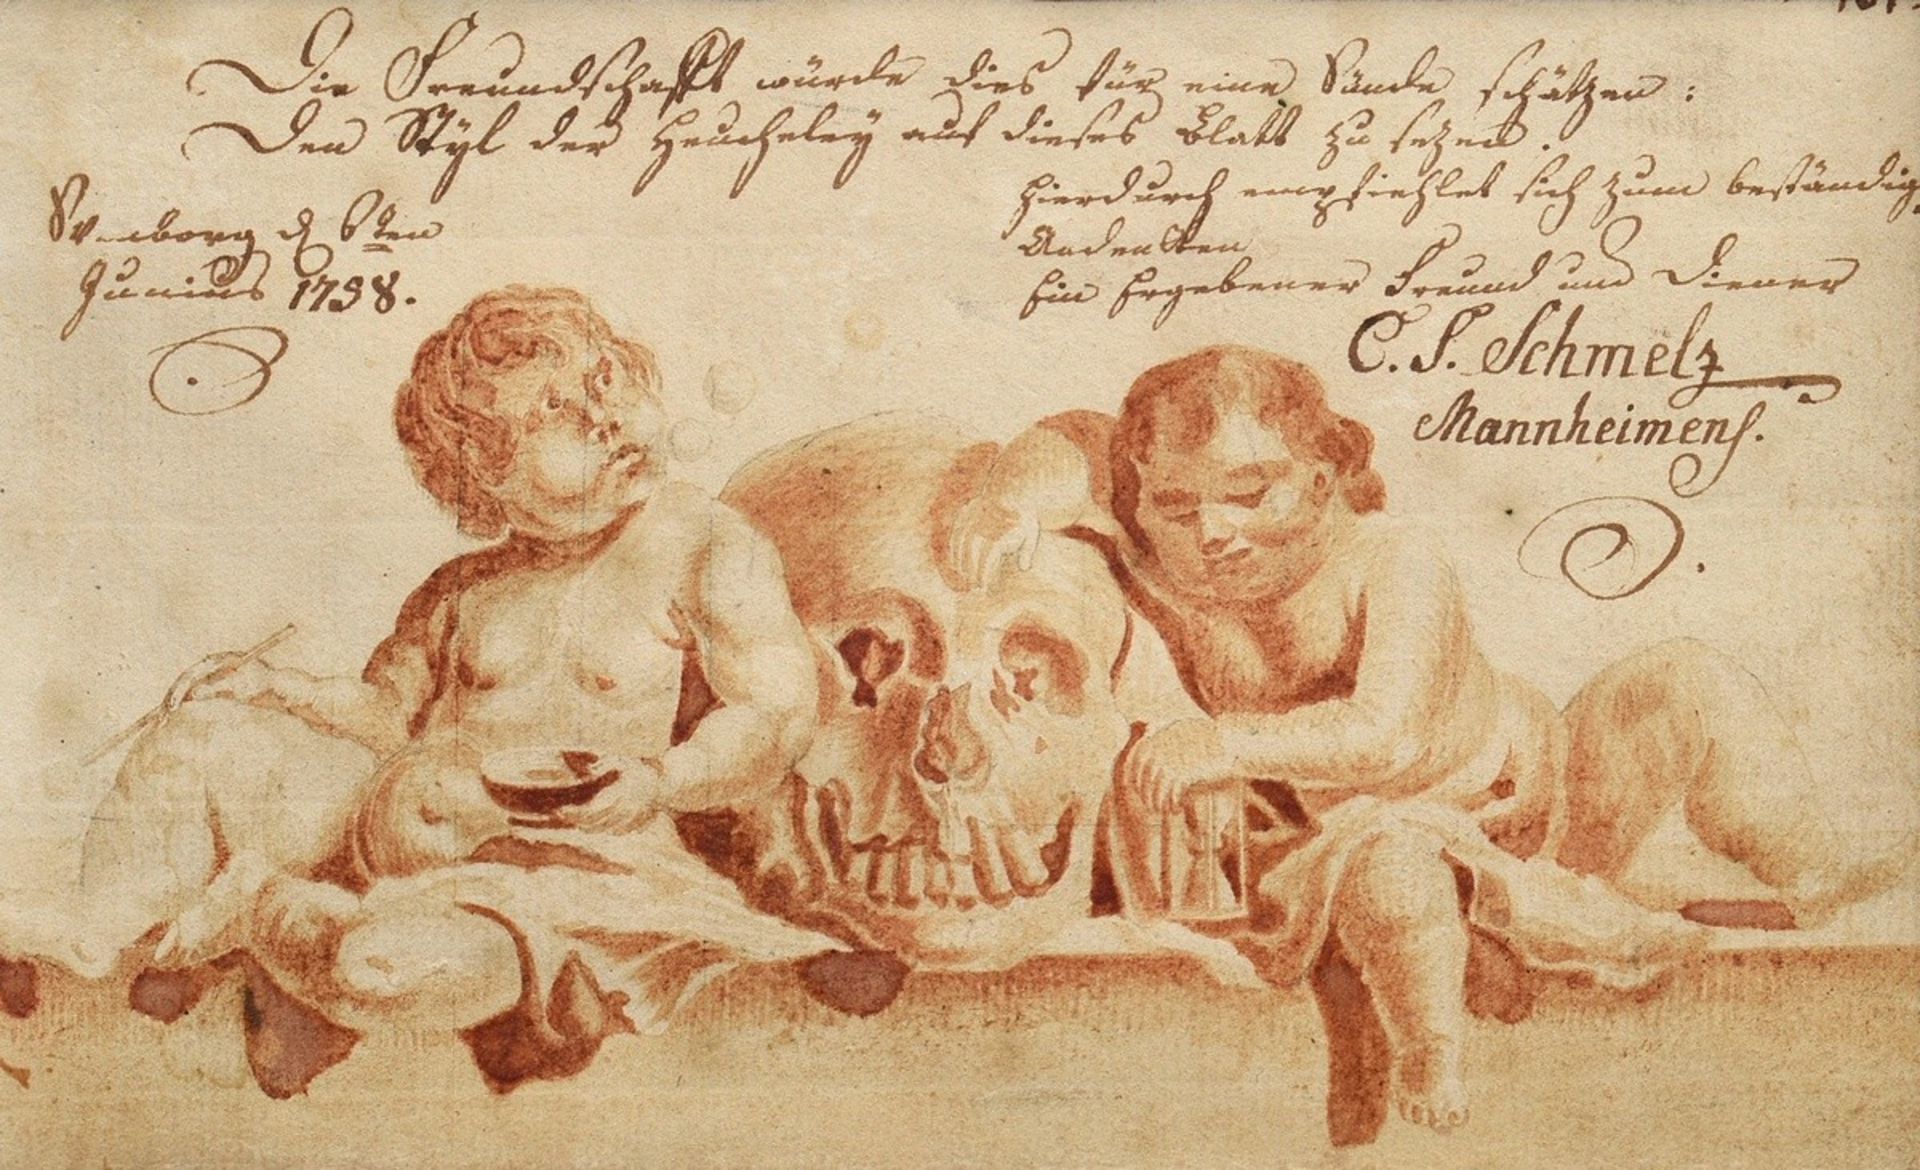 Schmelz, C.S. (18./19.Jh.) "Memento Mori" 1798, Sepiatinte, laviert, sign./dat., aus "Liber Amicoru